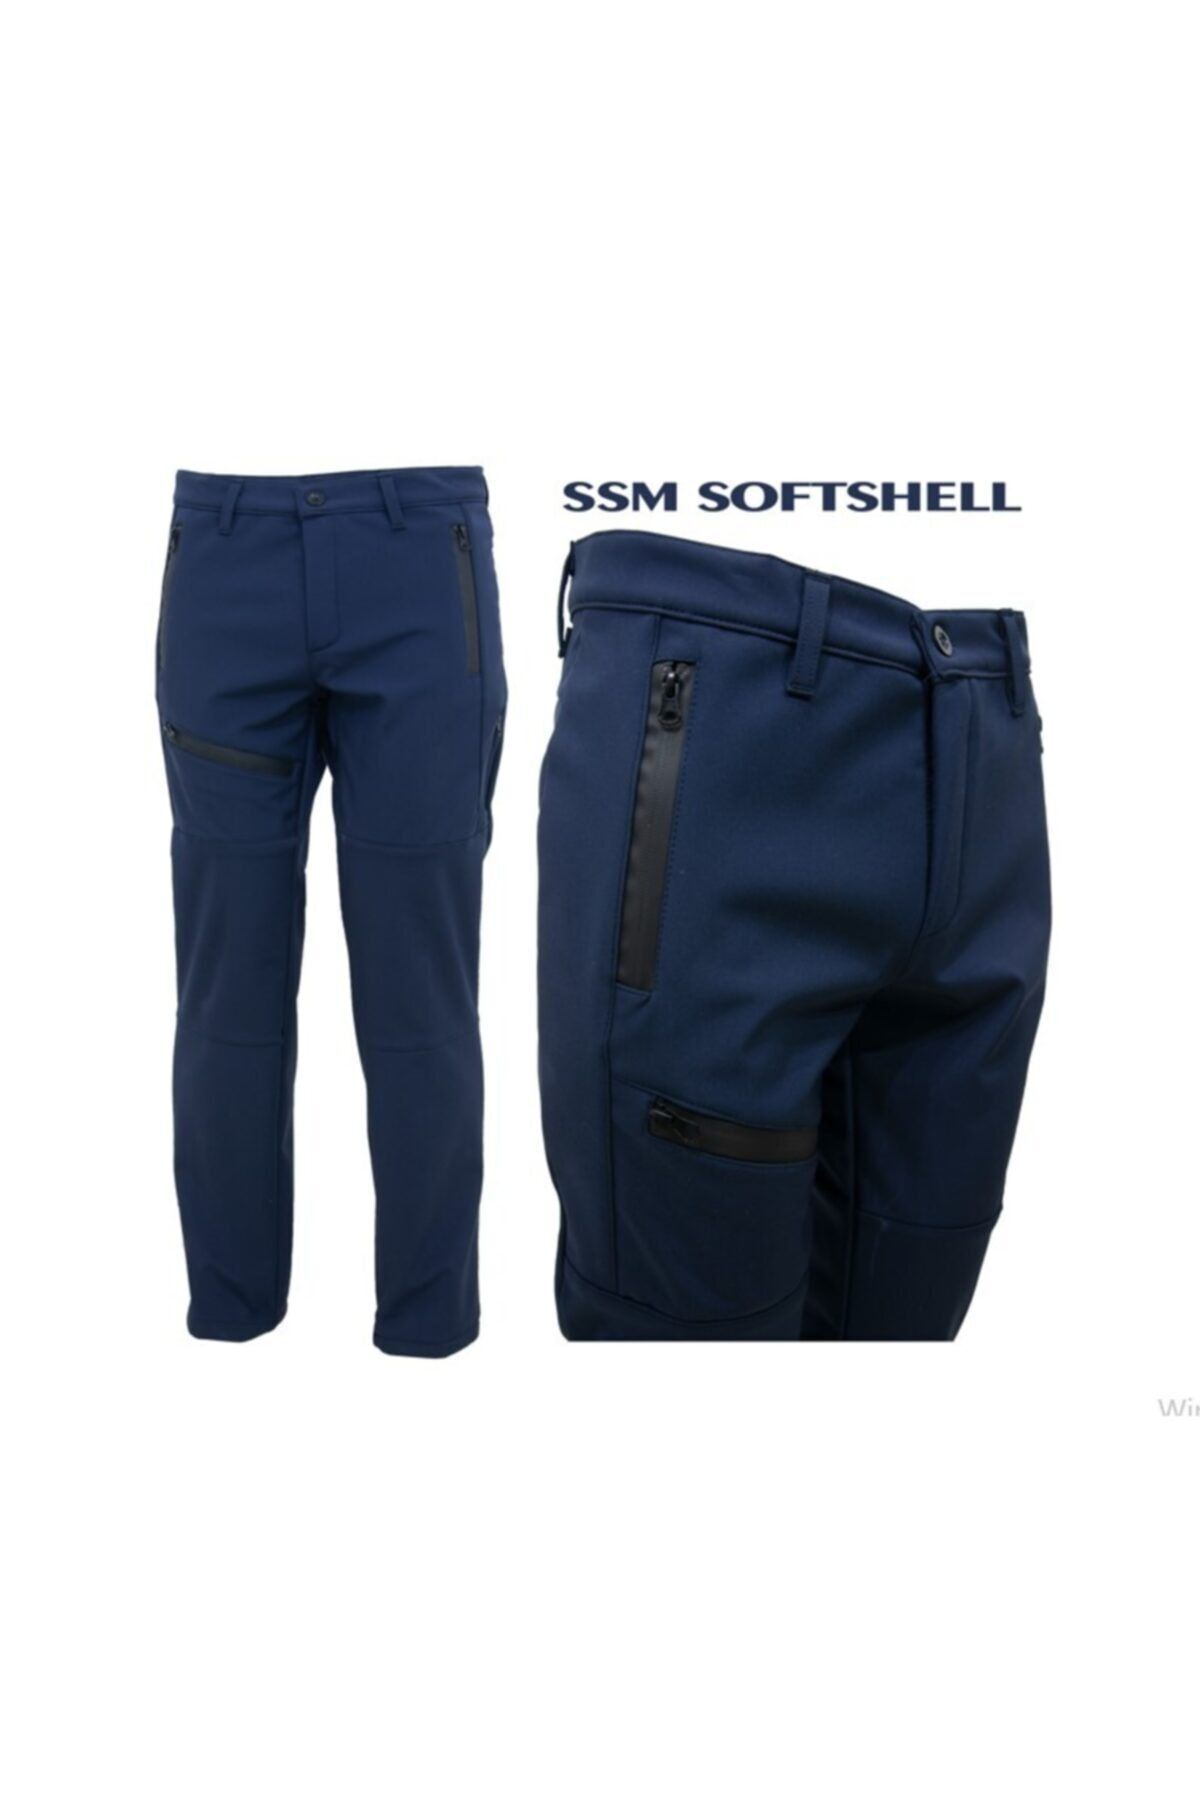 Ssm Outdoor Softshell Pantolon